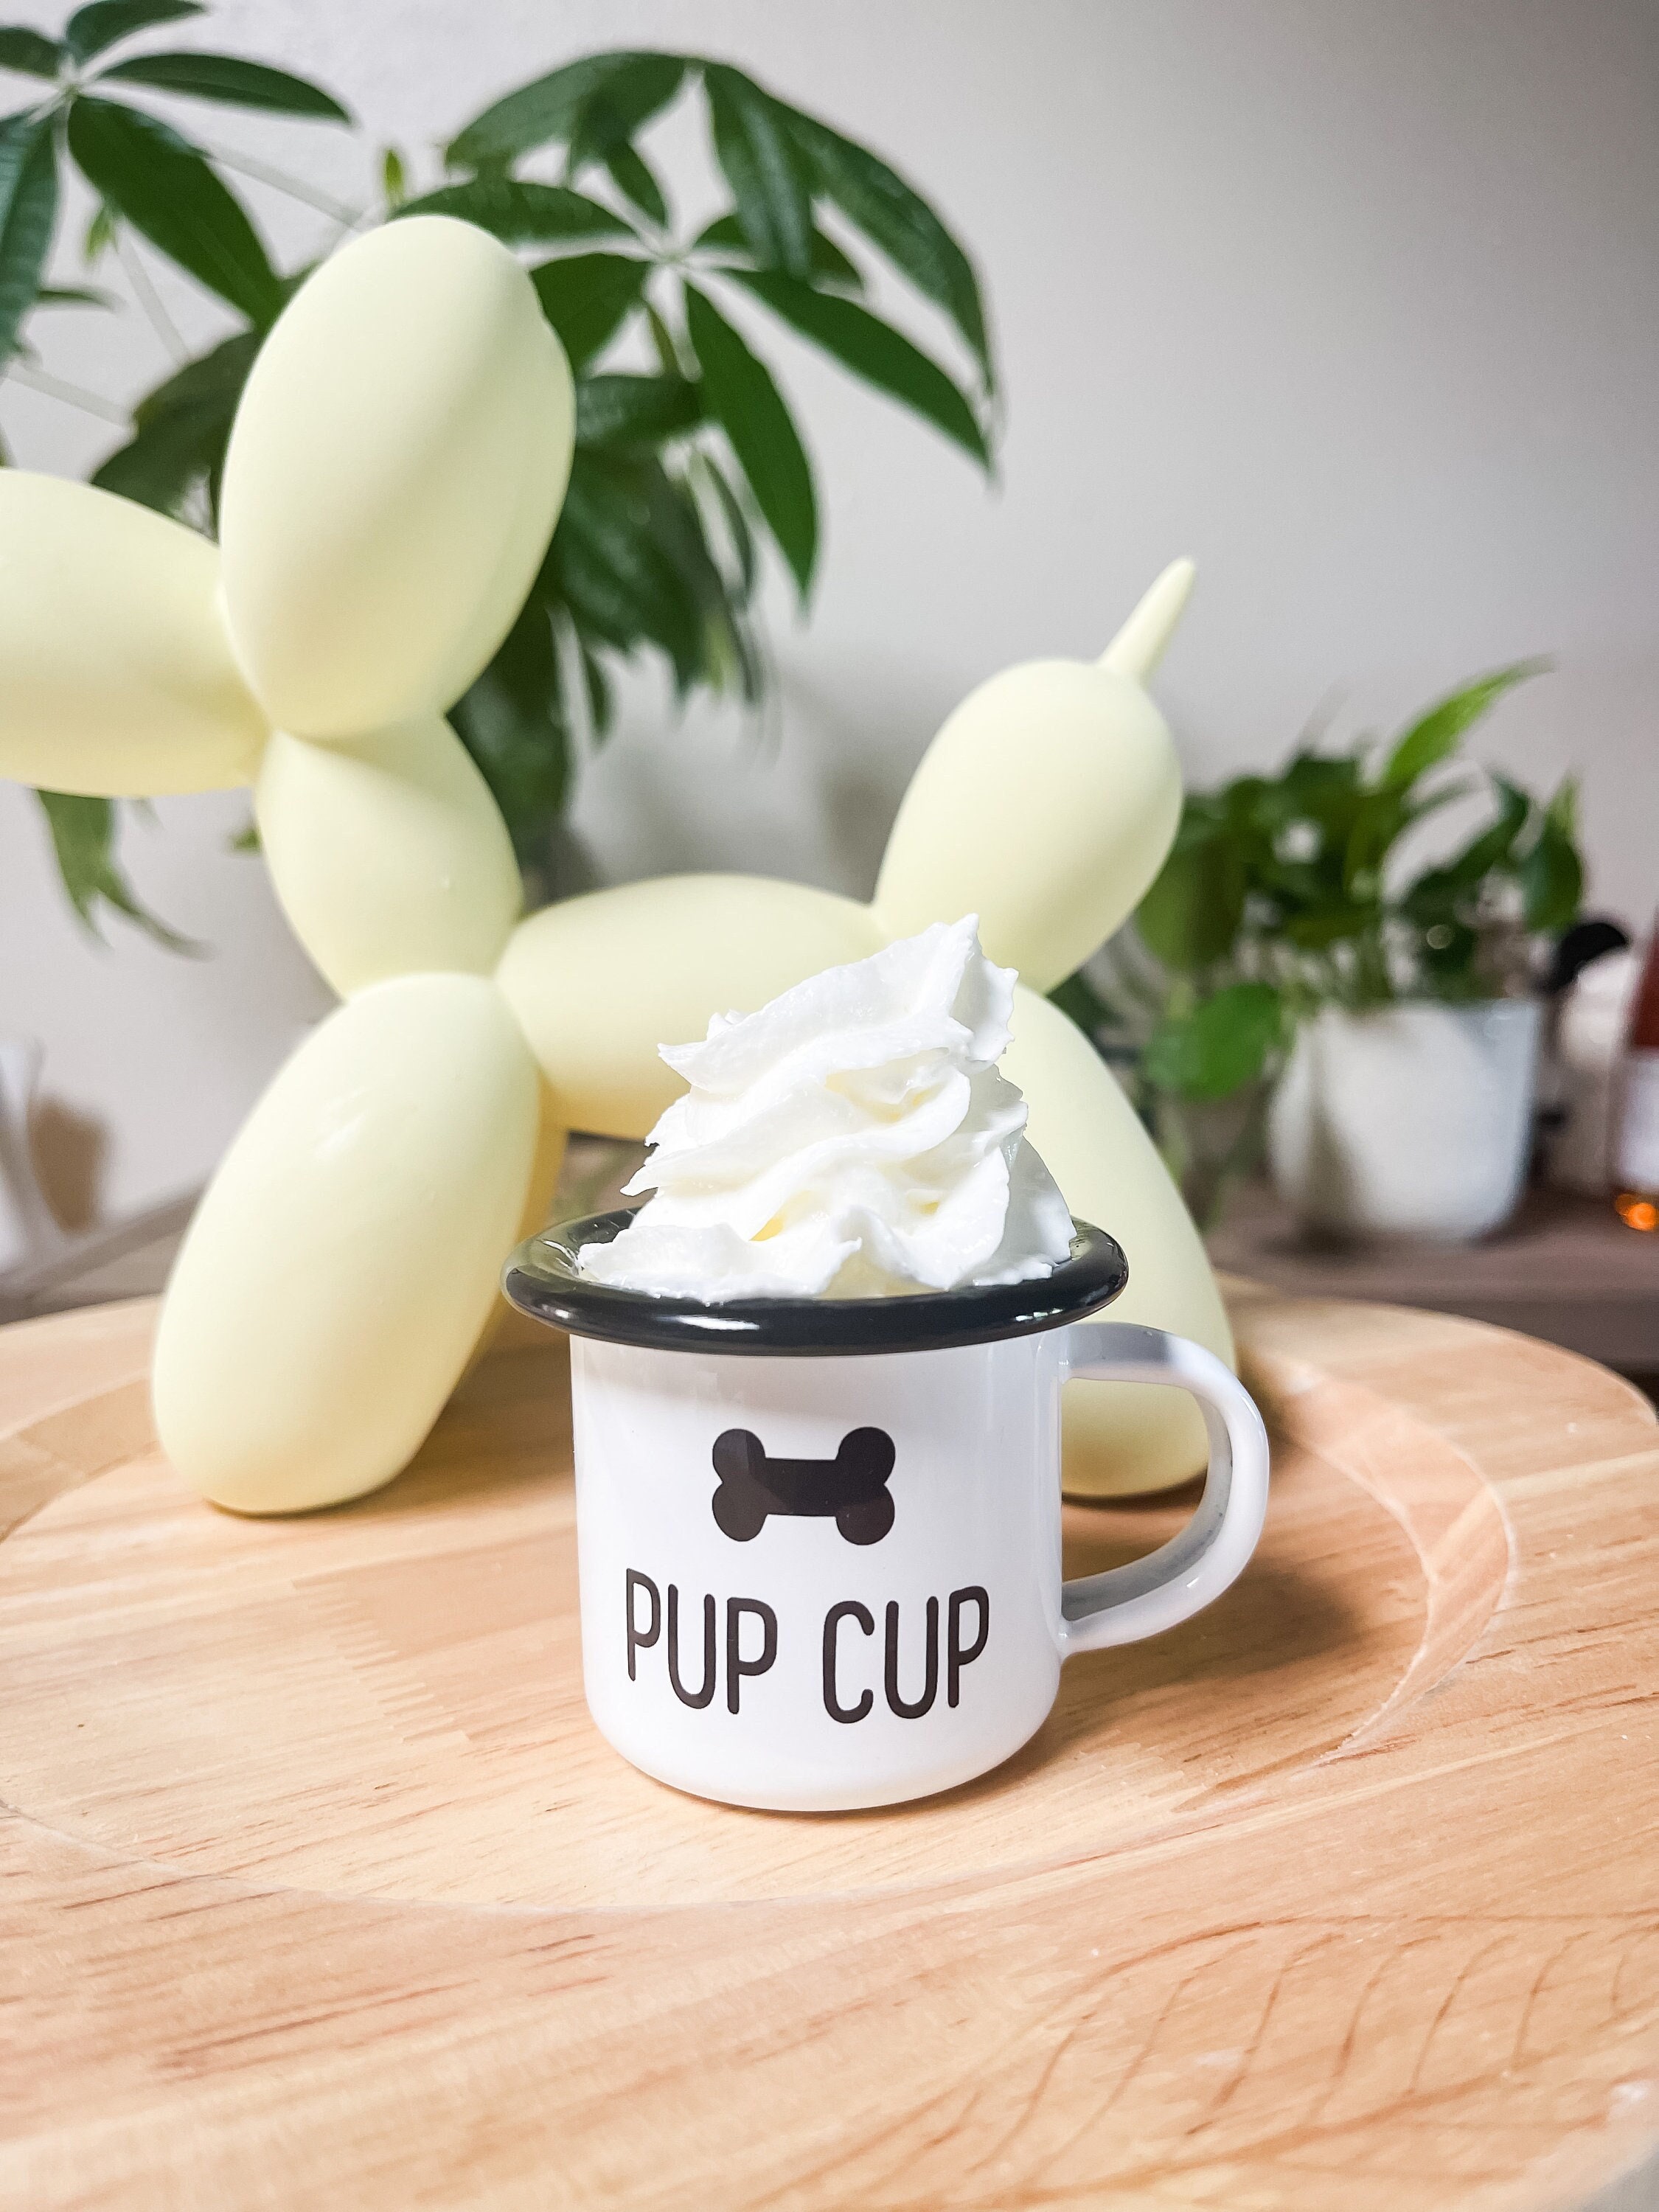 DOG MOM Starbucks Cup - BLUE – Vixen Fluffy Paws